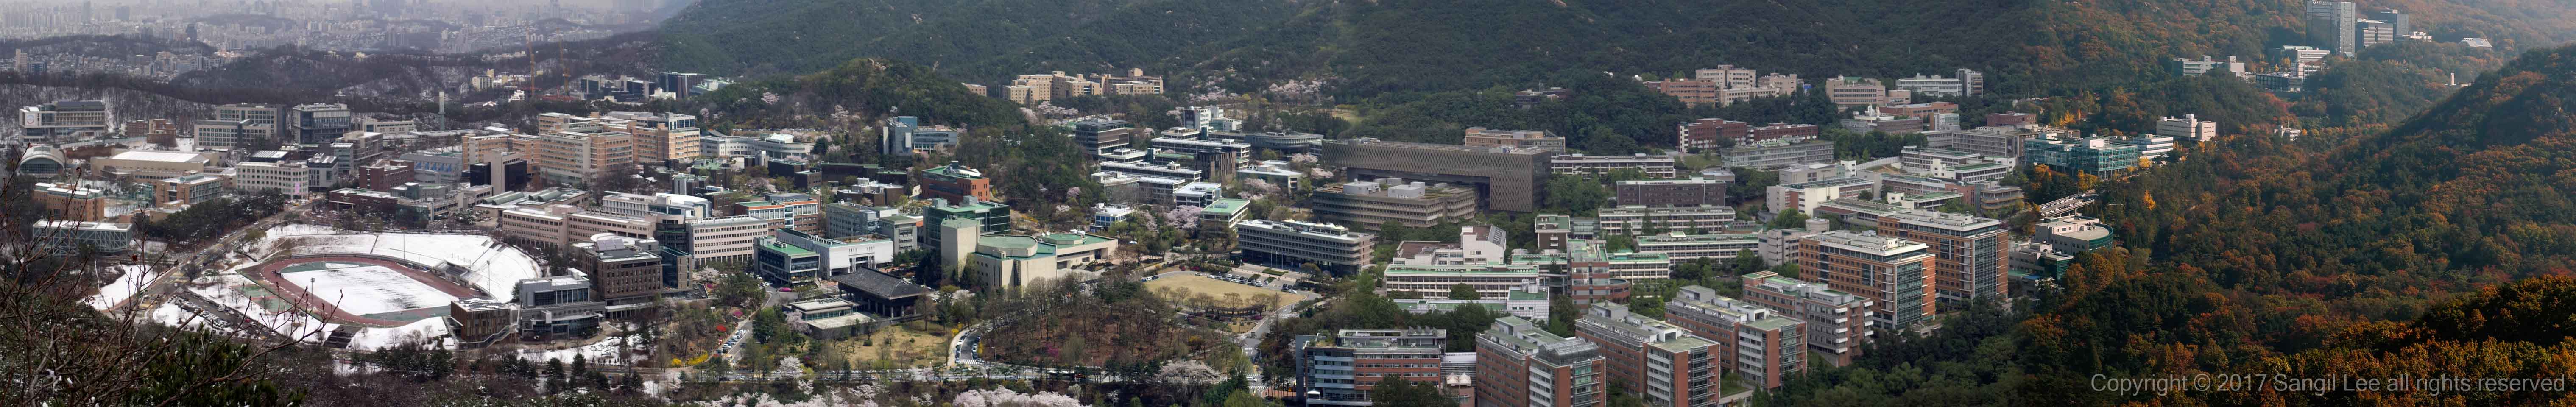 SNU at Mt. Samsung